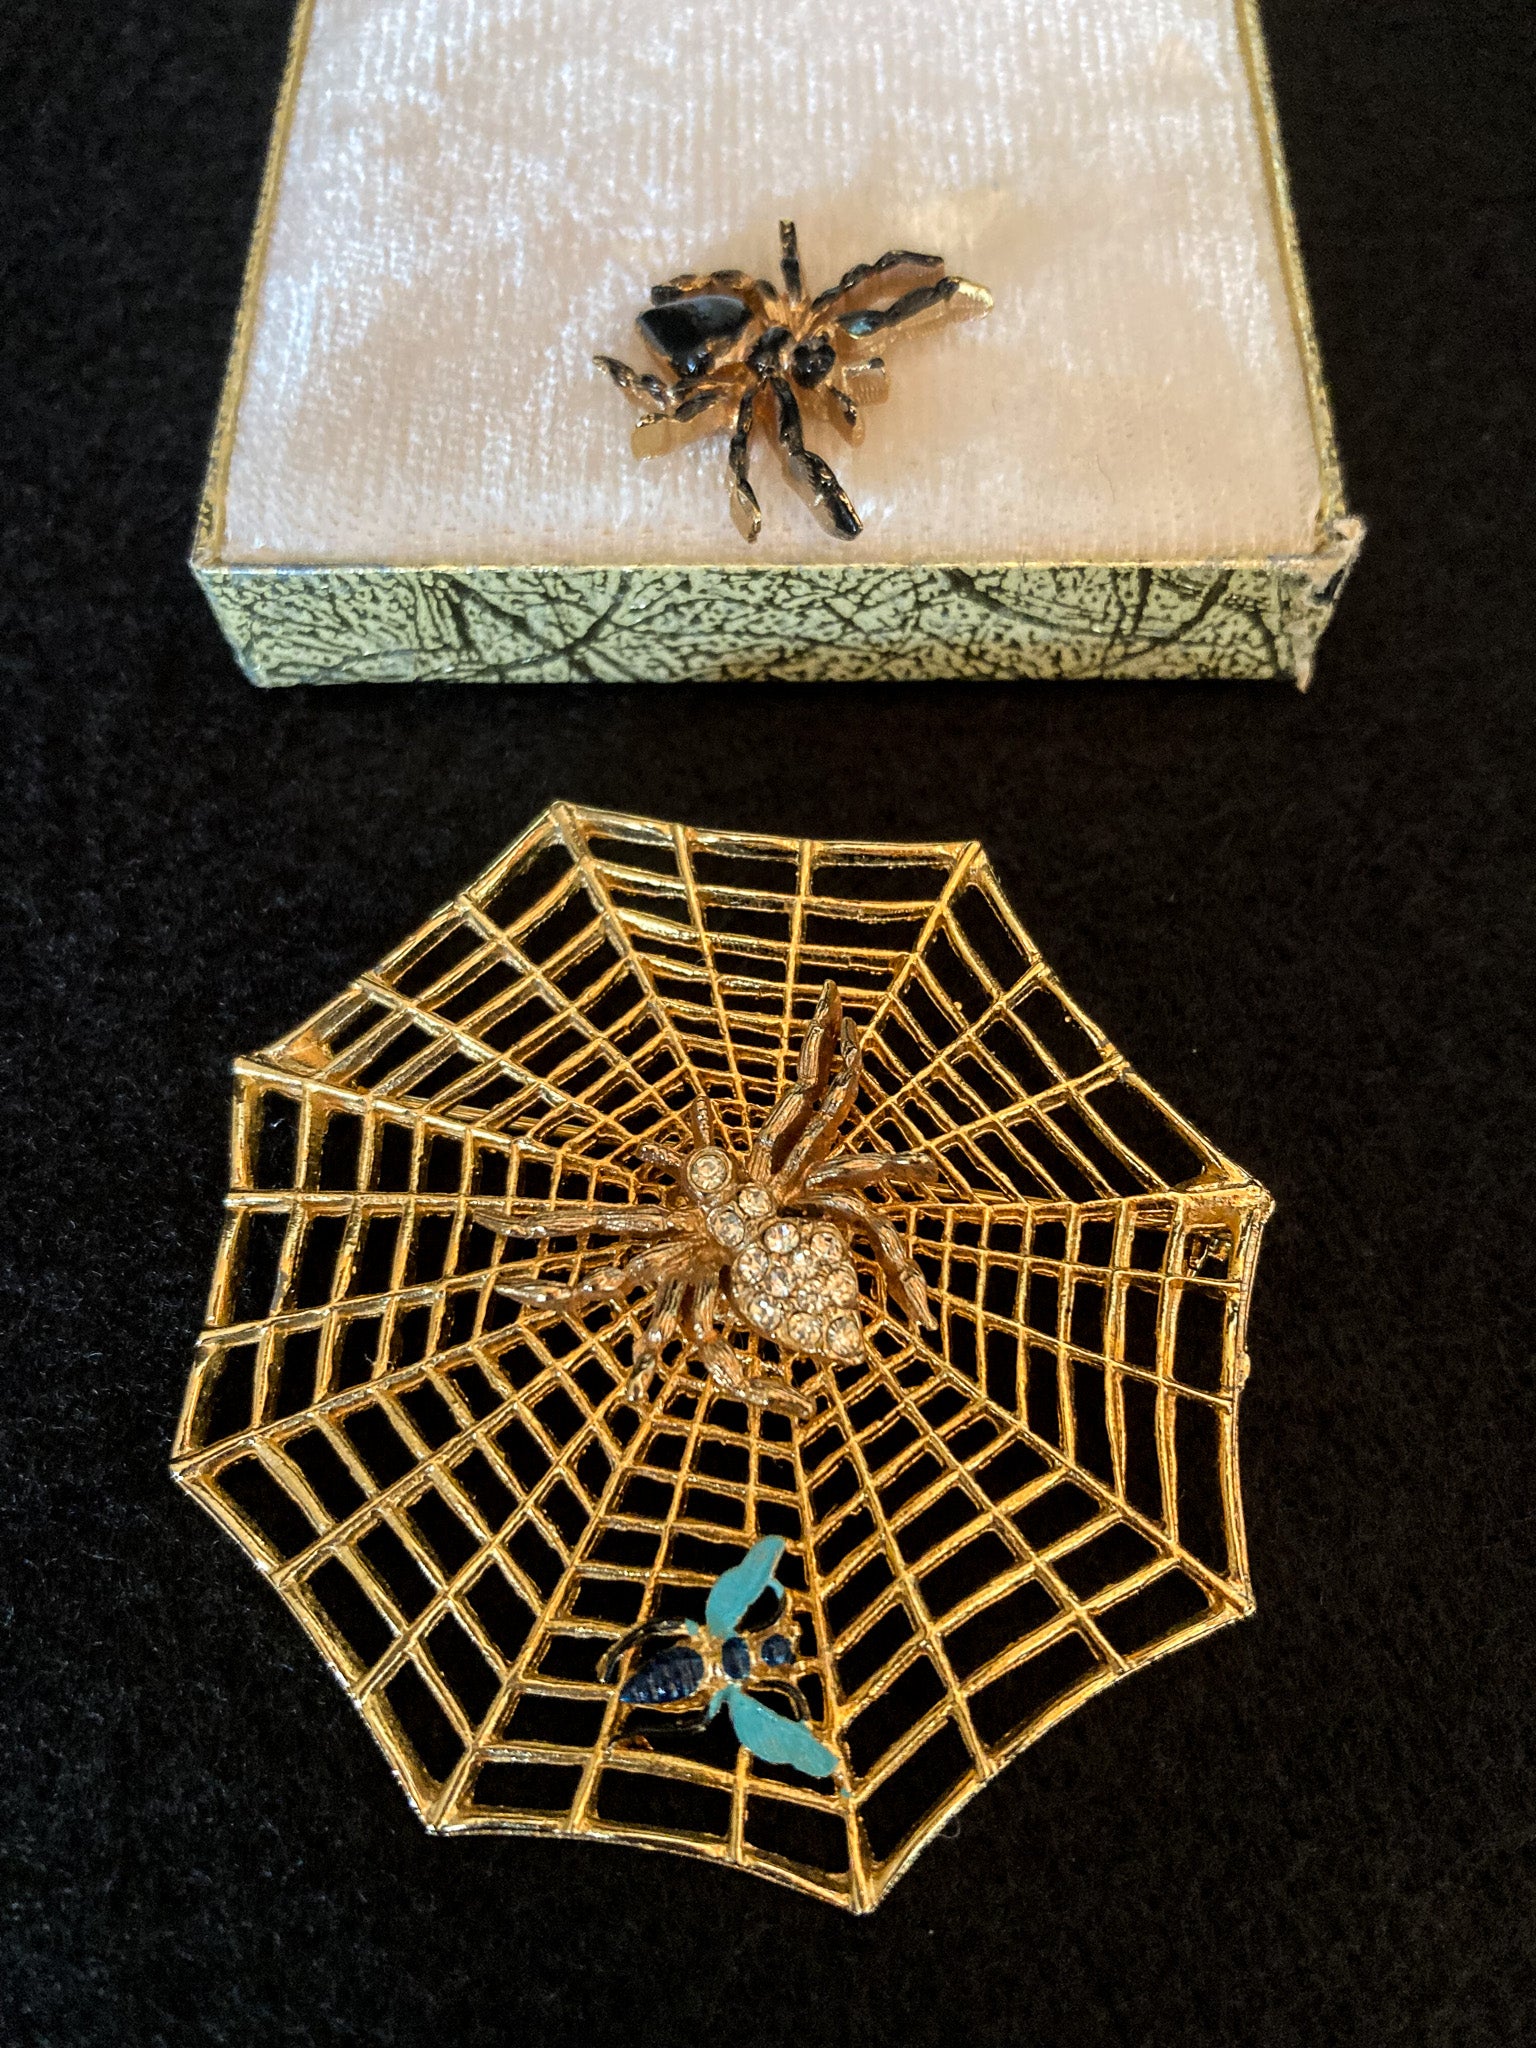 1960’s Beau Jewels Spider Web Convertible Brooch in Original Box